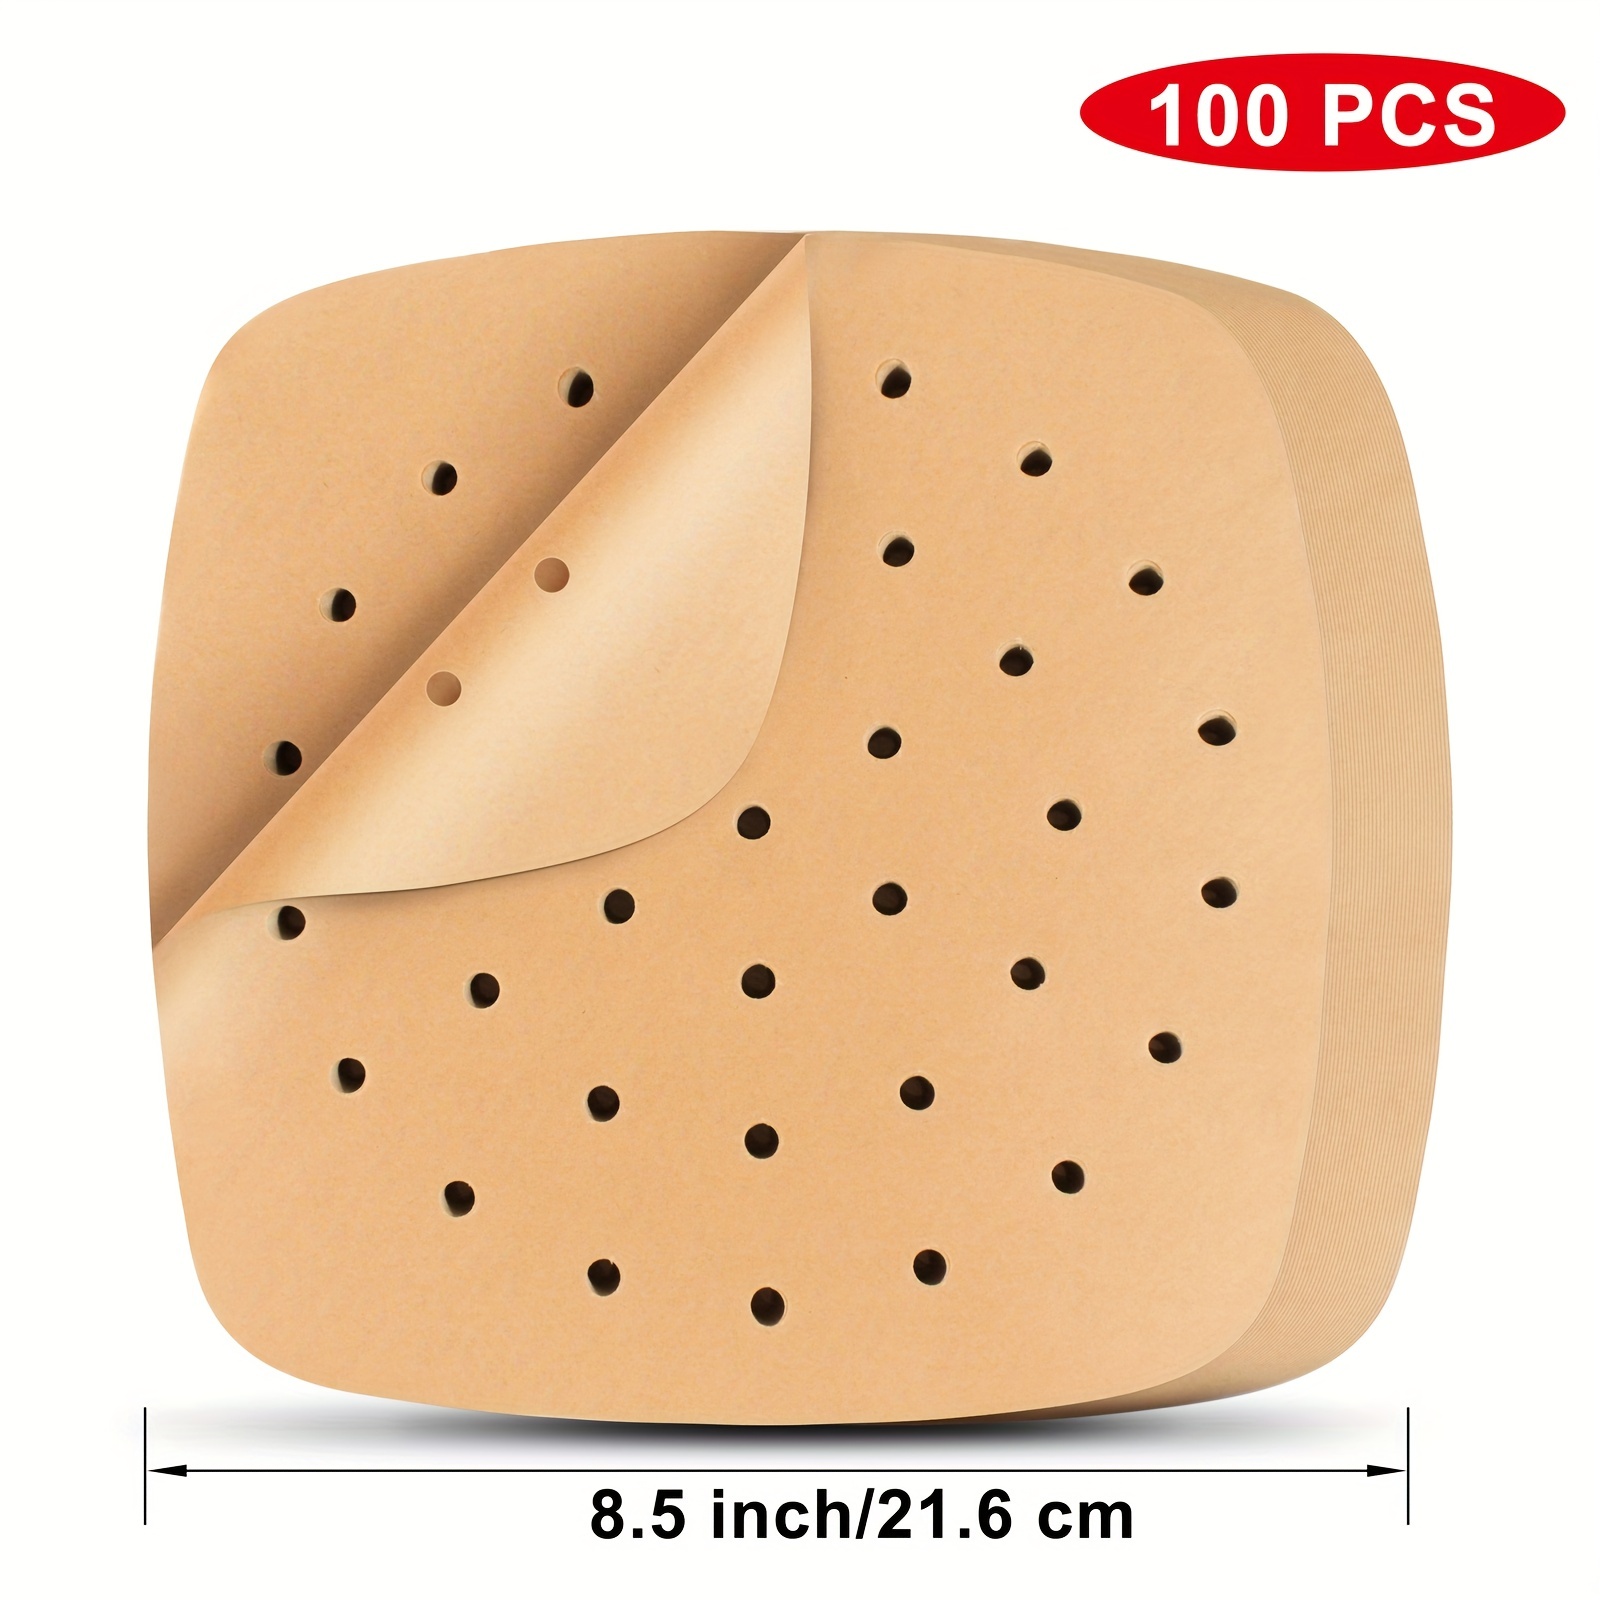 8.5 inches (approximately 21.6 cm) square silicone non-stick air